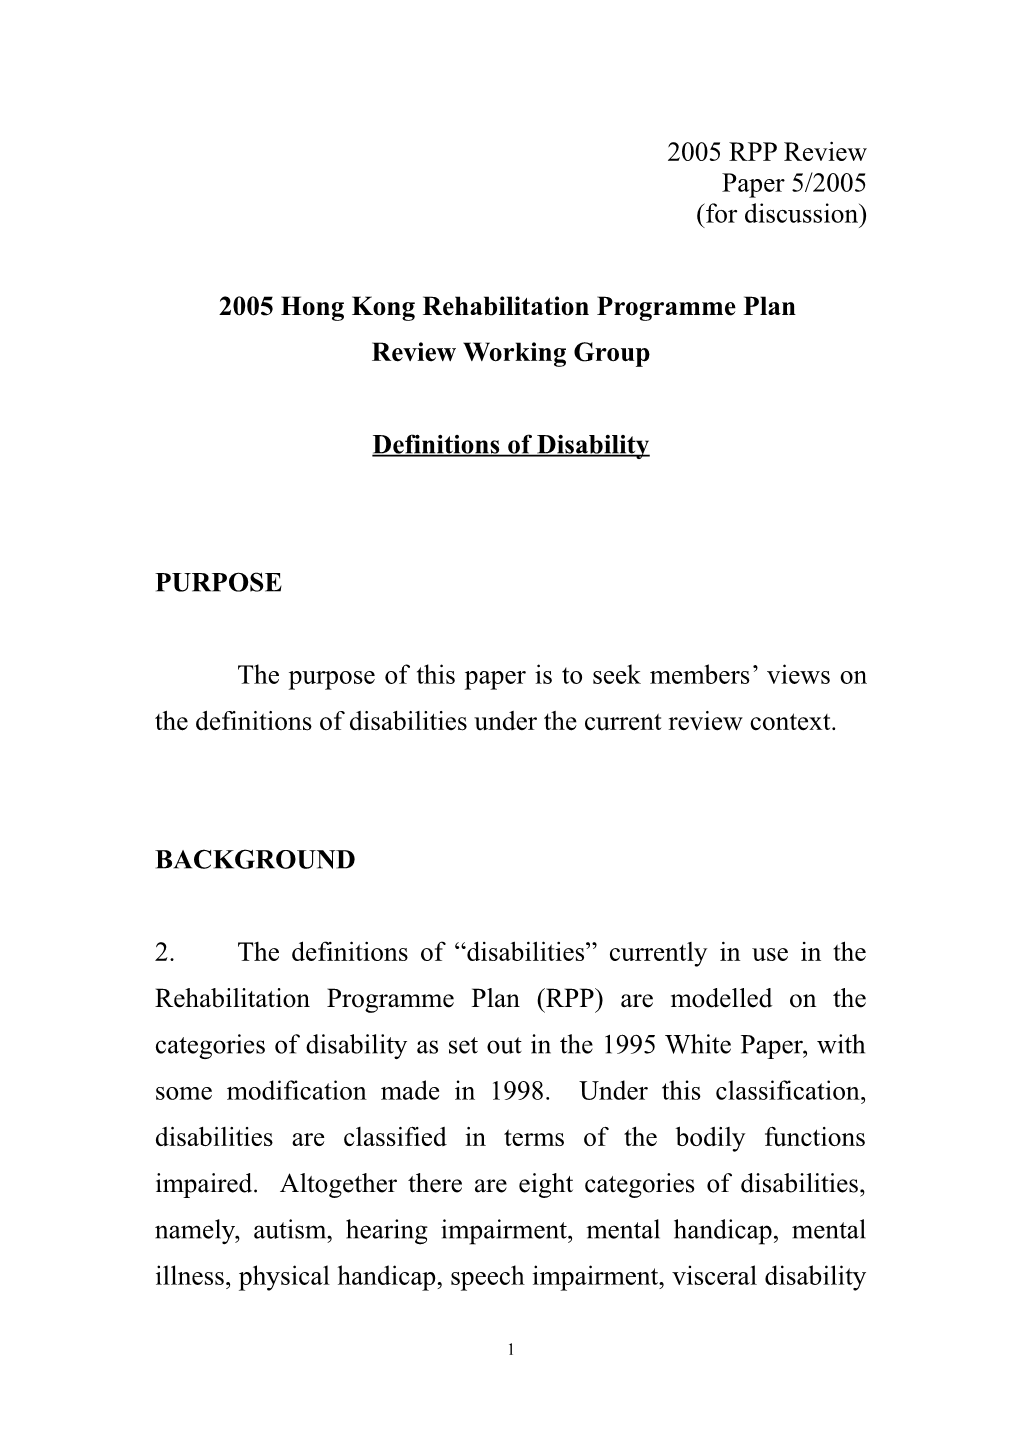 2005 Hong Kong Rehabilitation Programme Plan